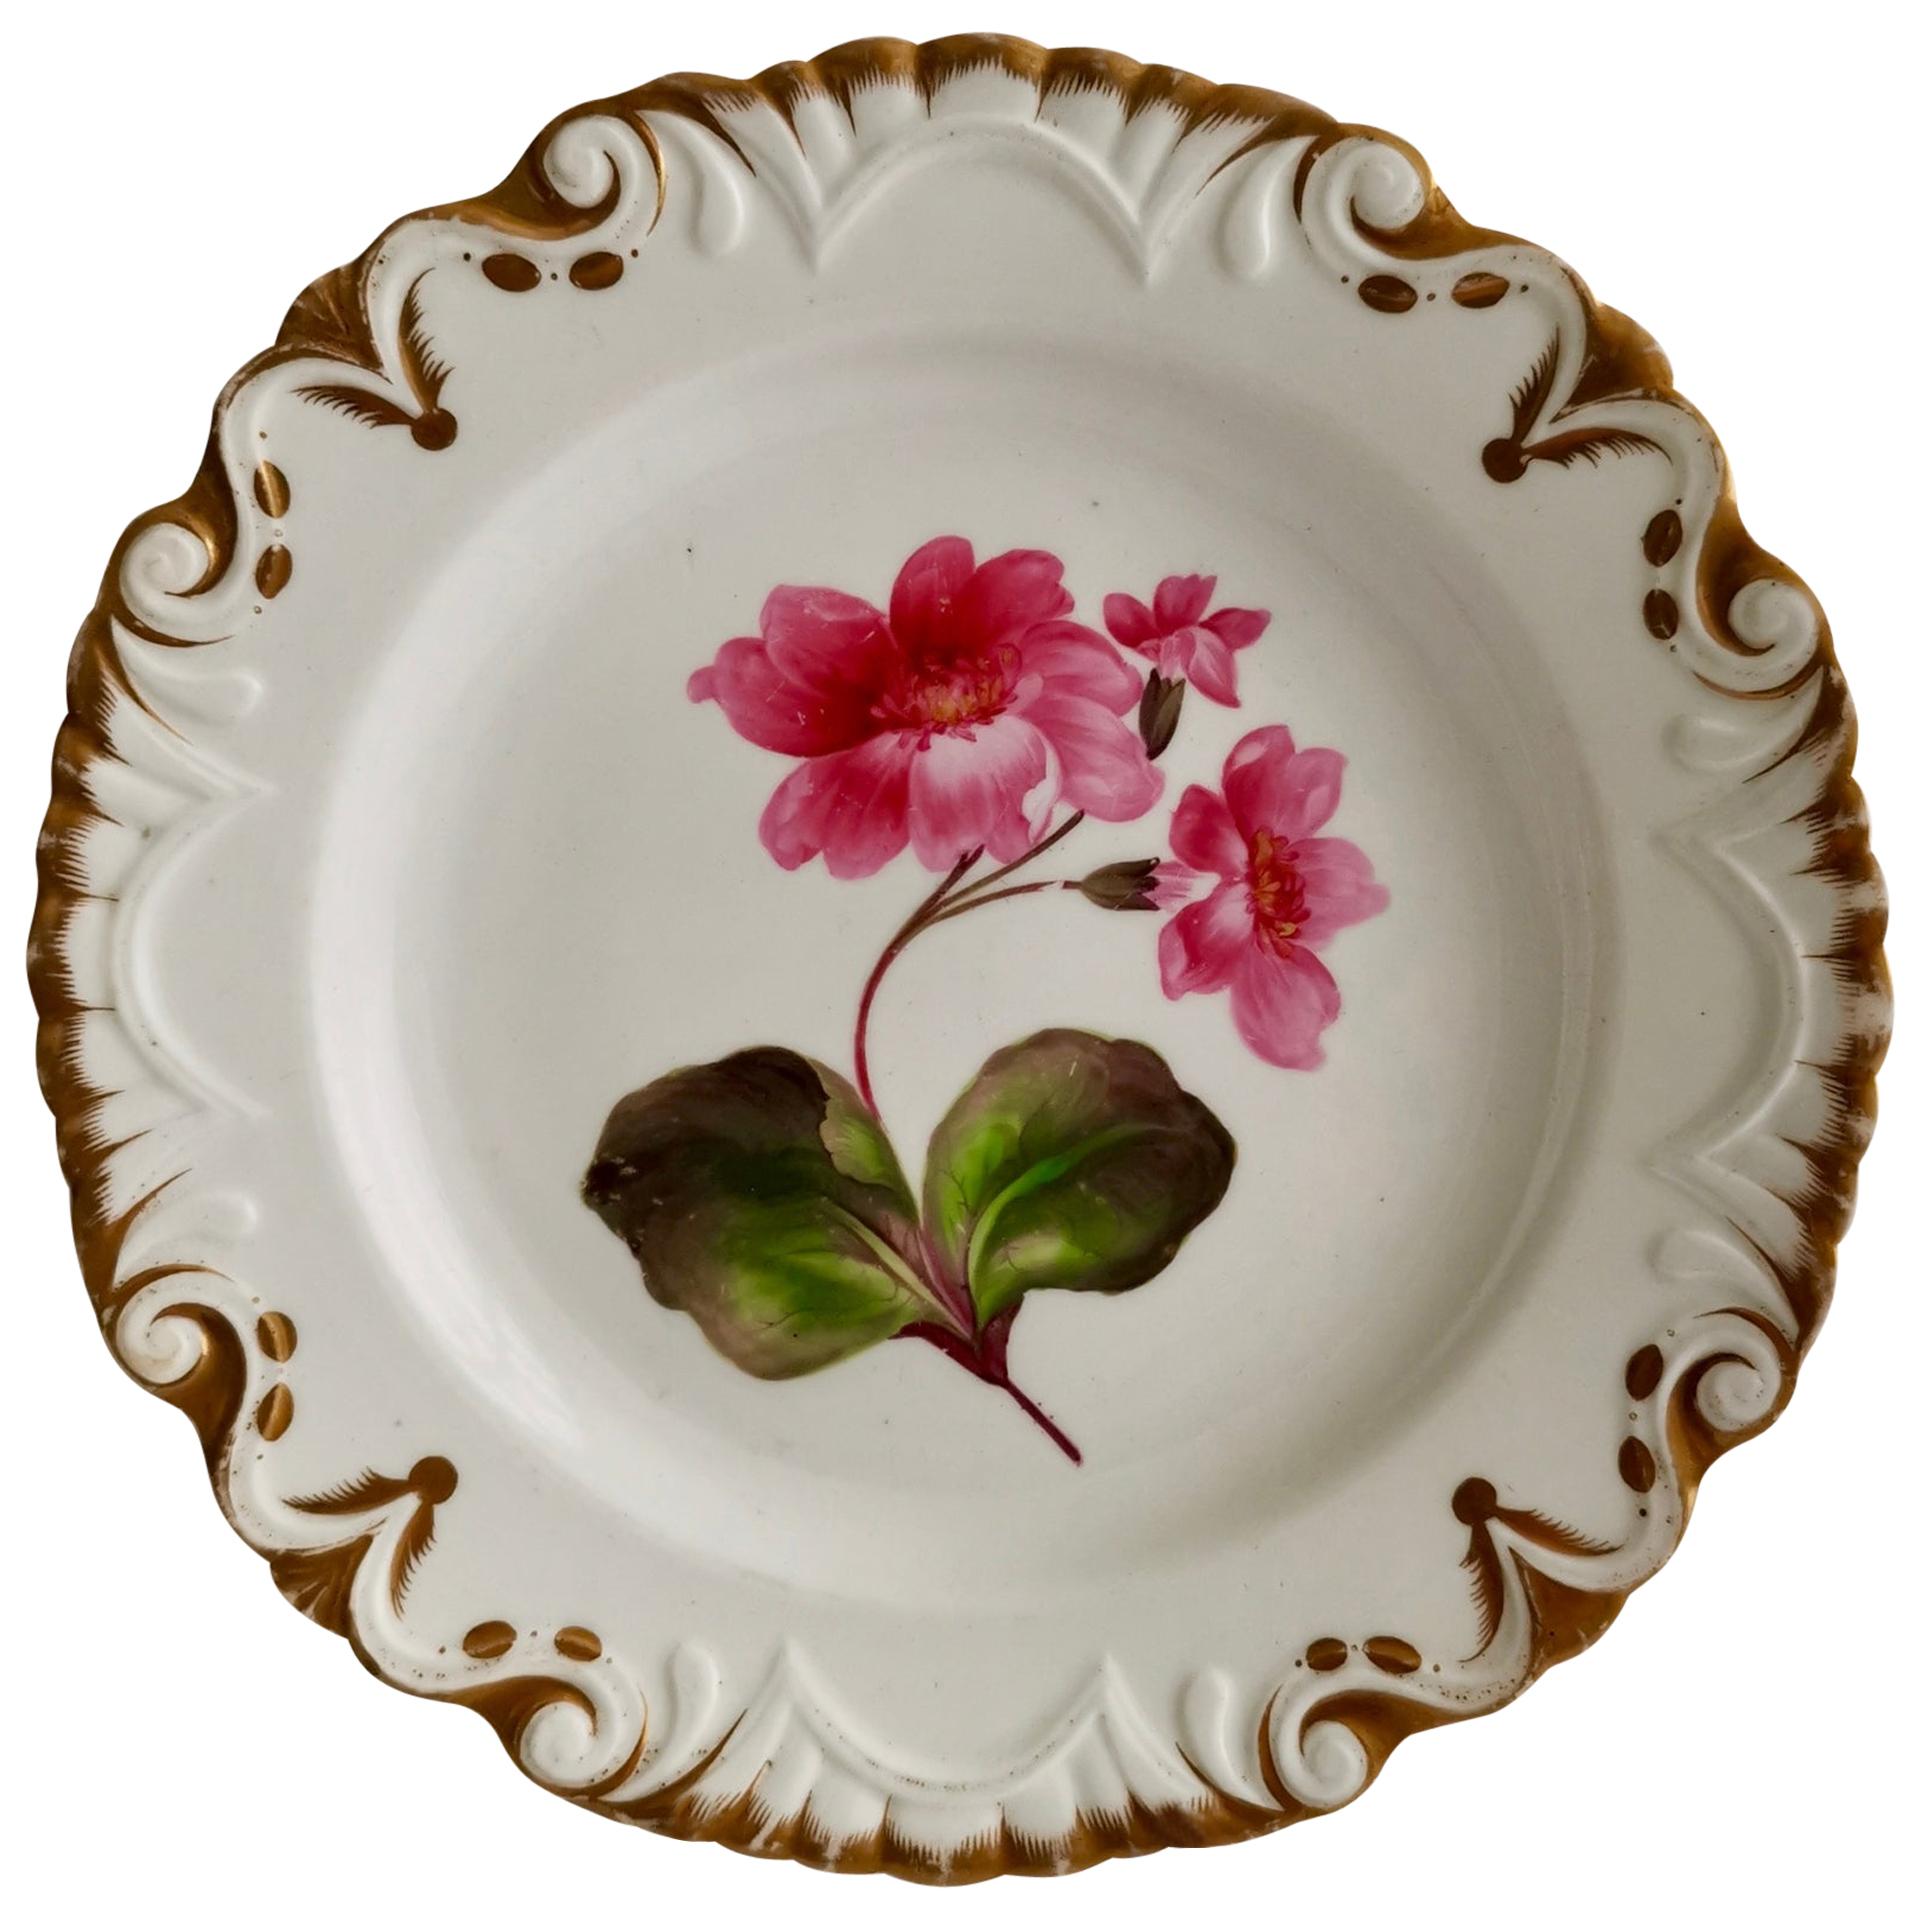 Machin Porcelain Plate, White, Moustache Shape with Pink Flower, Regency